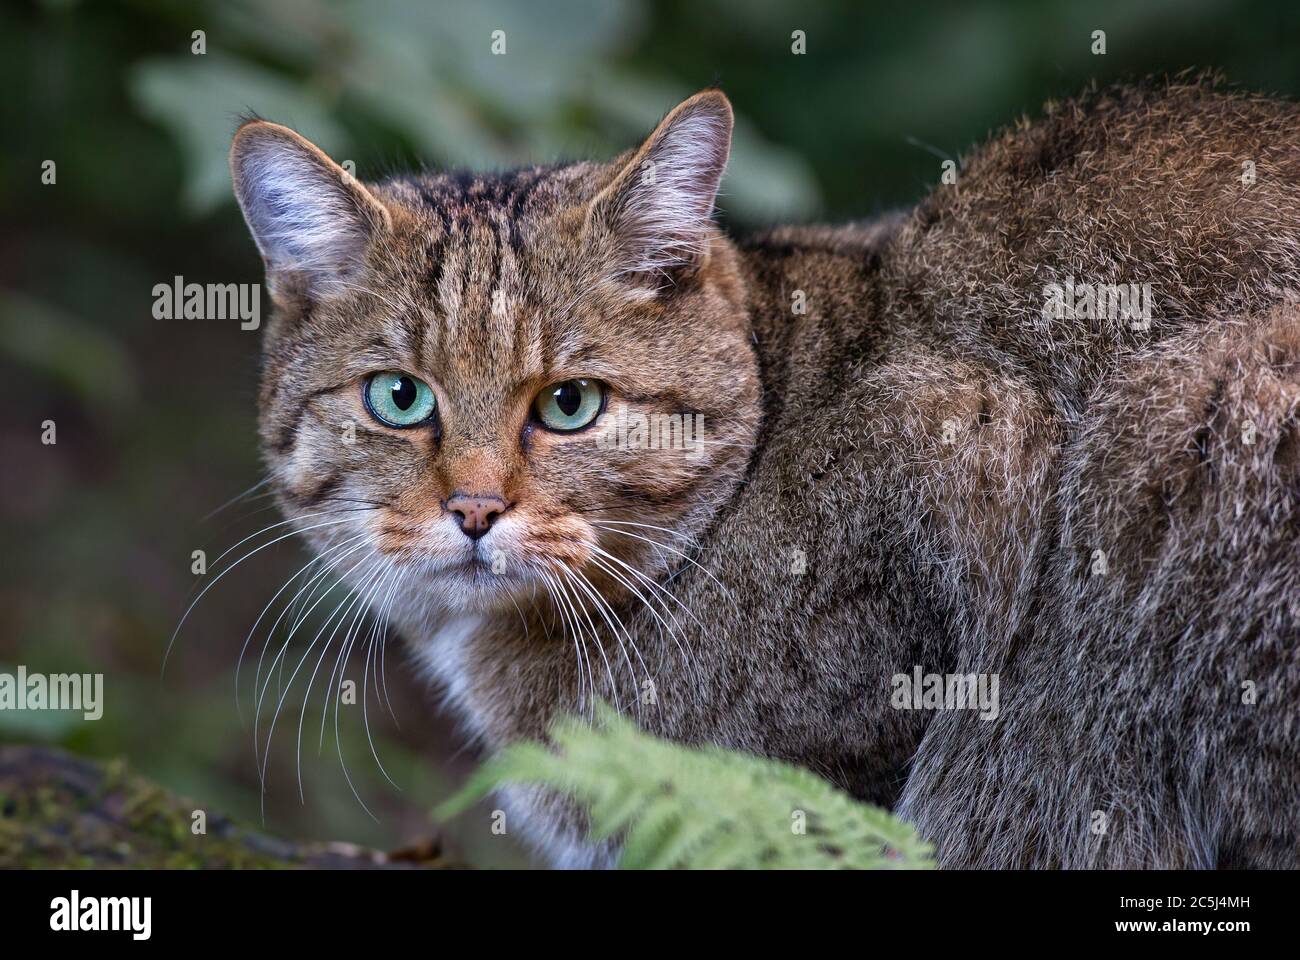 Wildcat - Felis silvestris, beautiful rare wild cat from European forests, Switzerland. Stock Photo